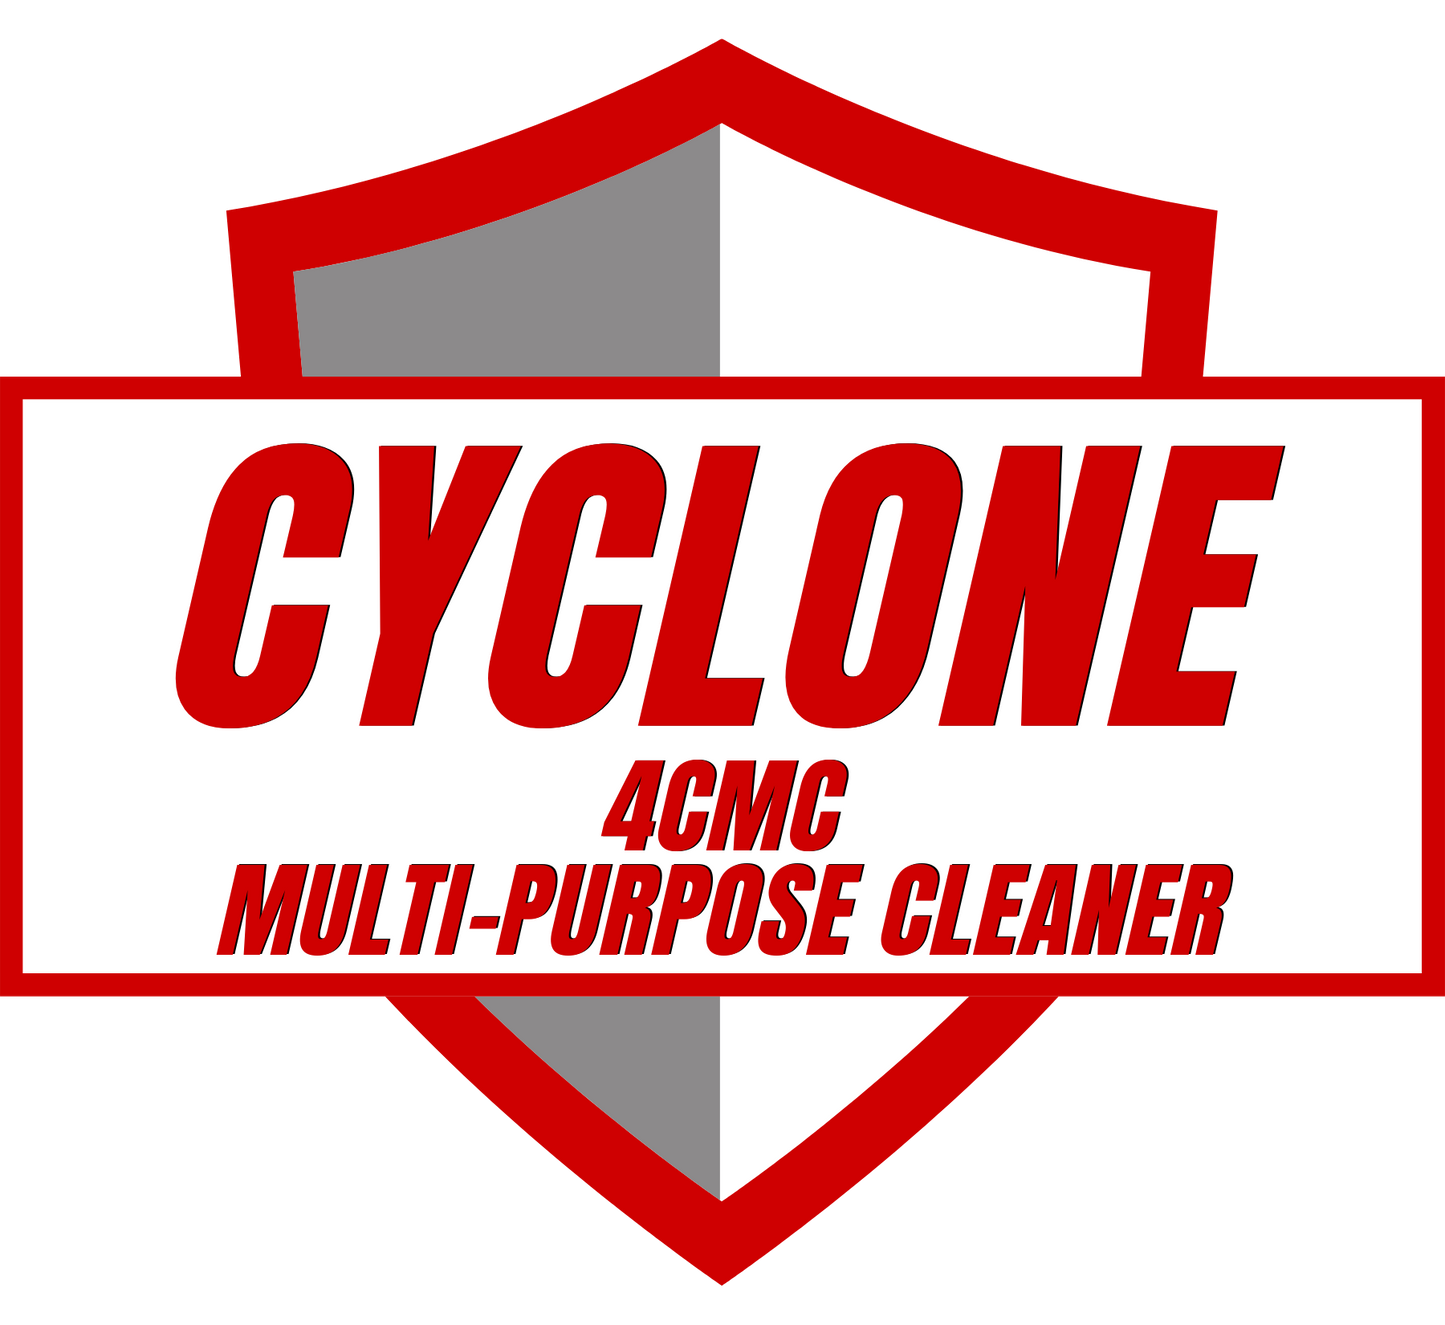 Clean - Cyclone